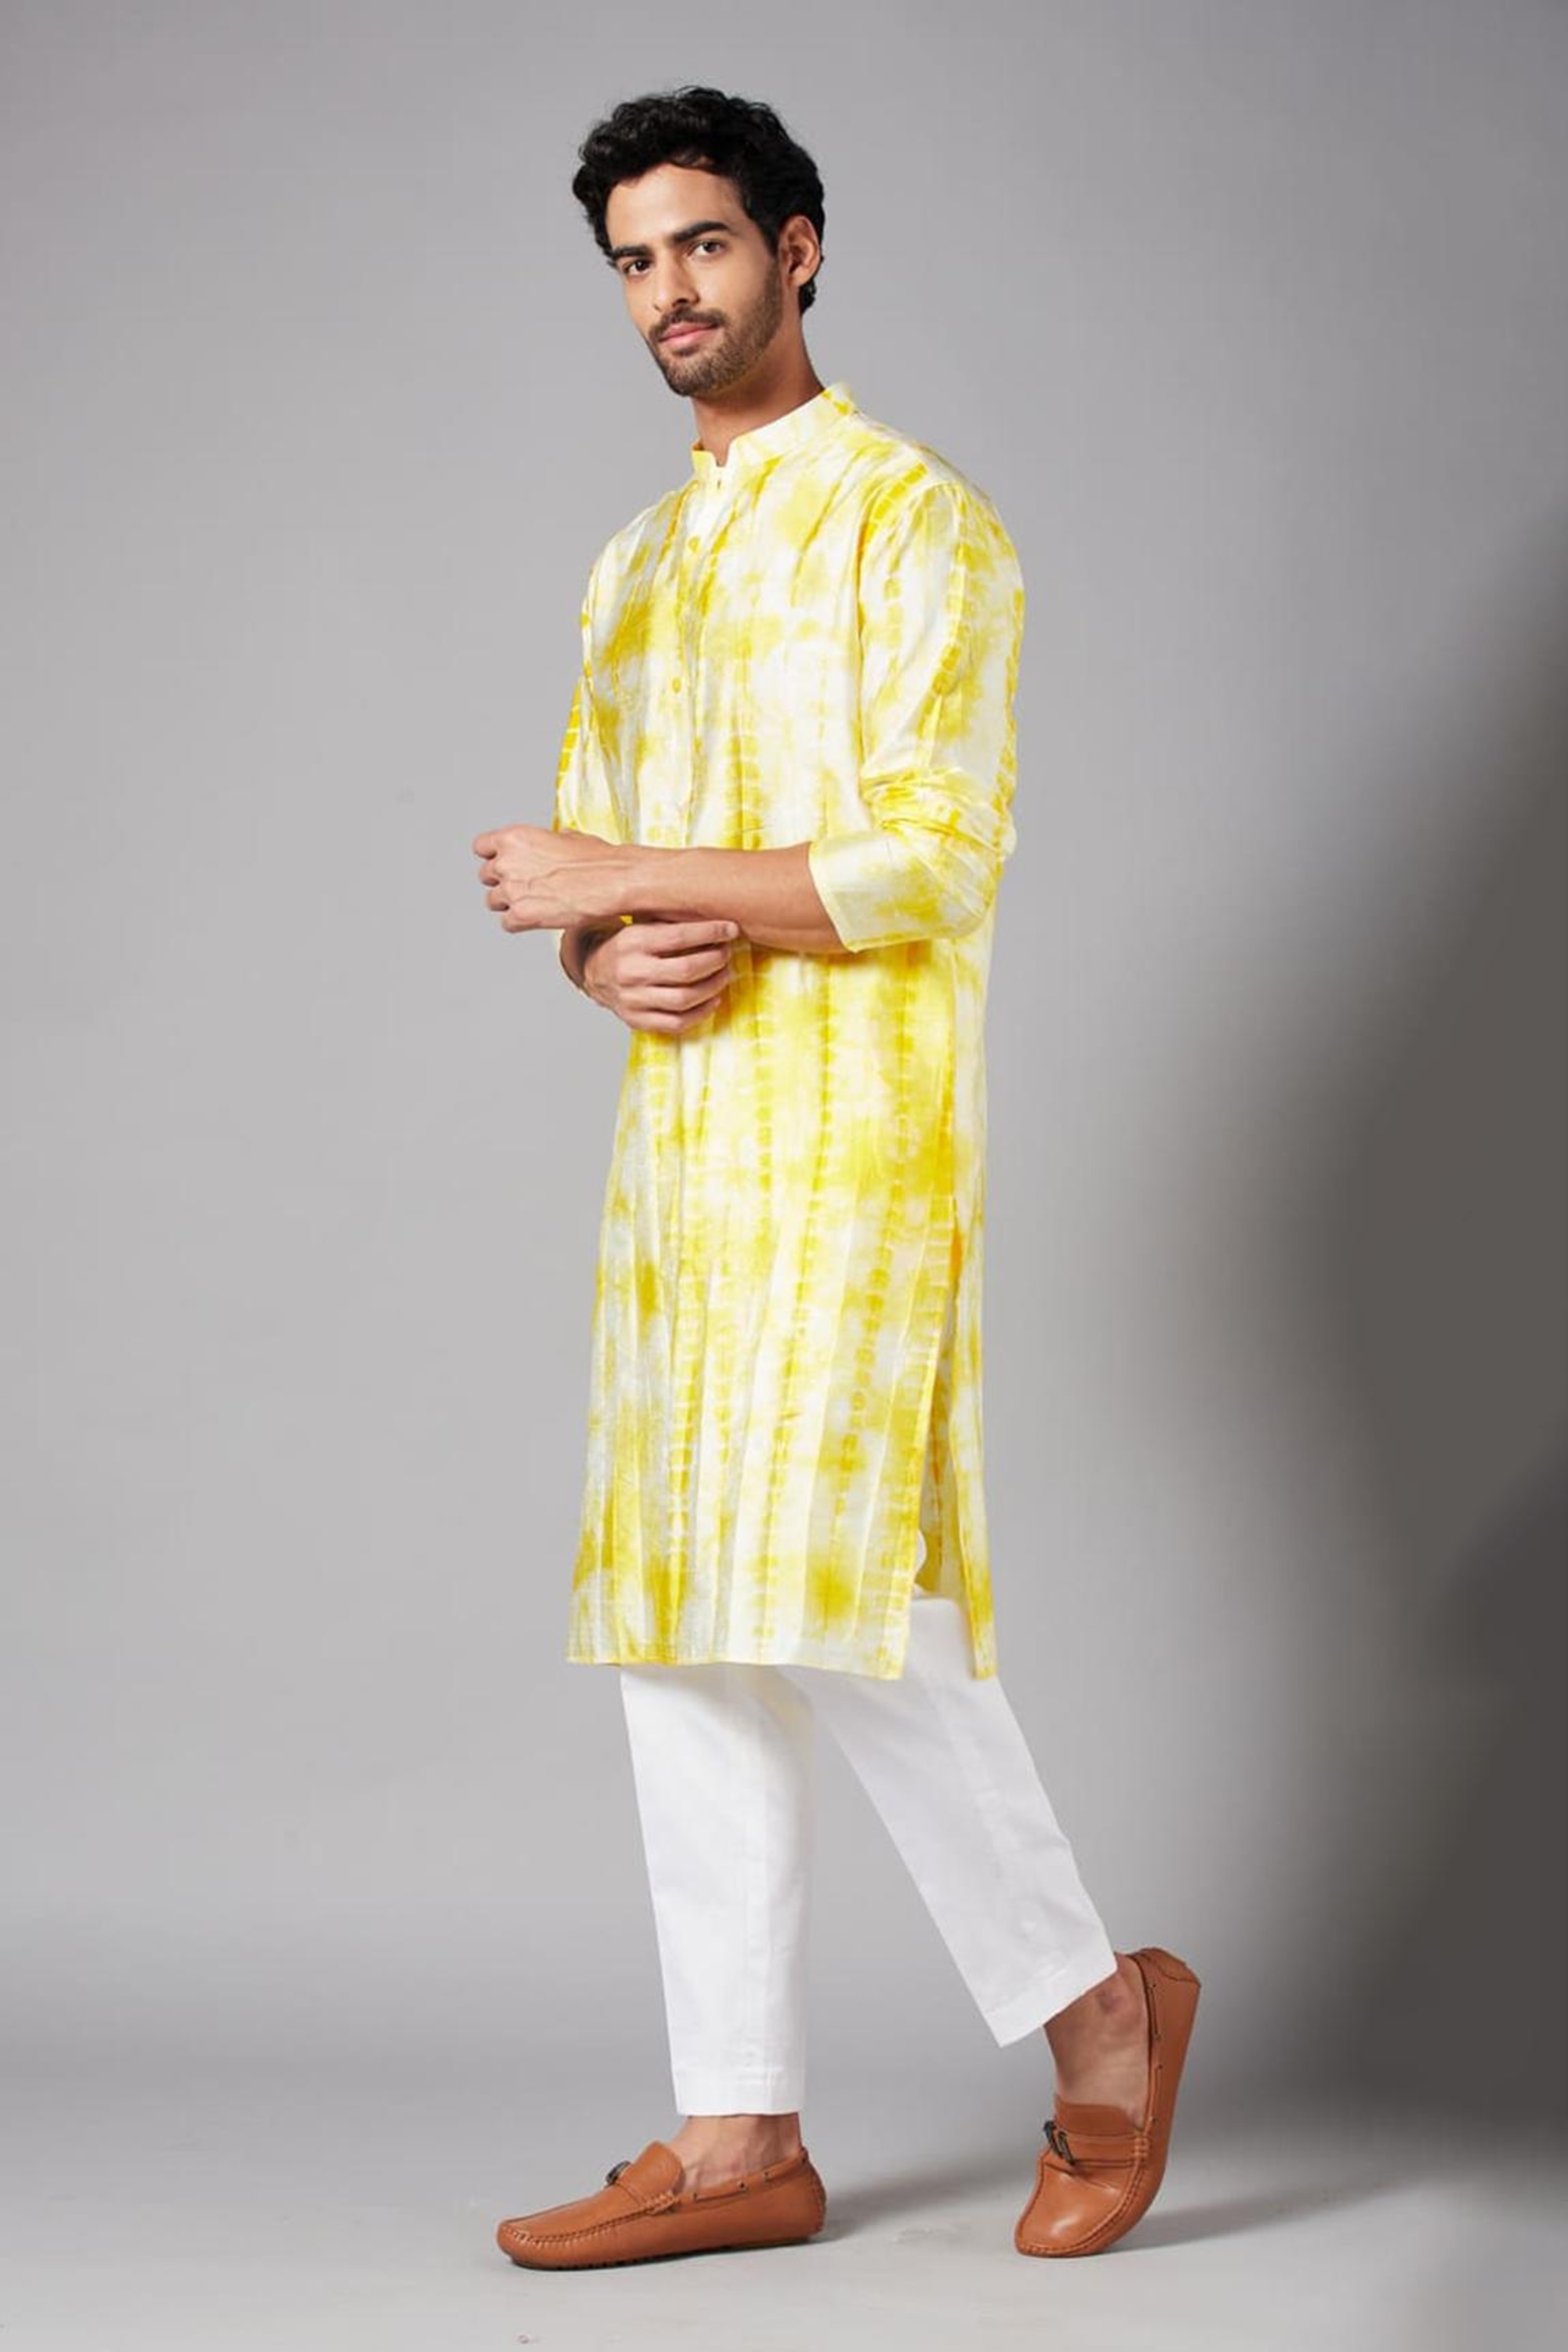  Diwali Outfit Ideas